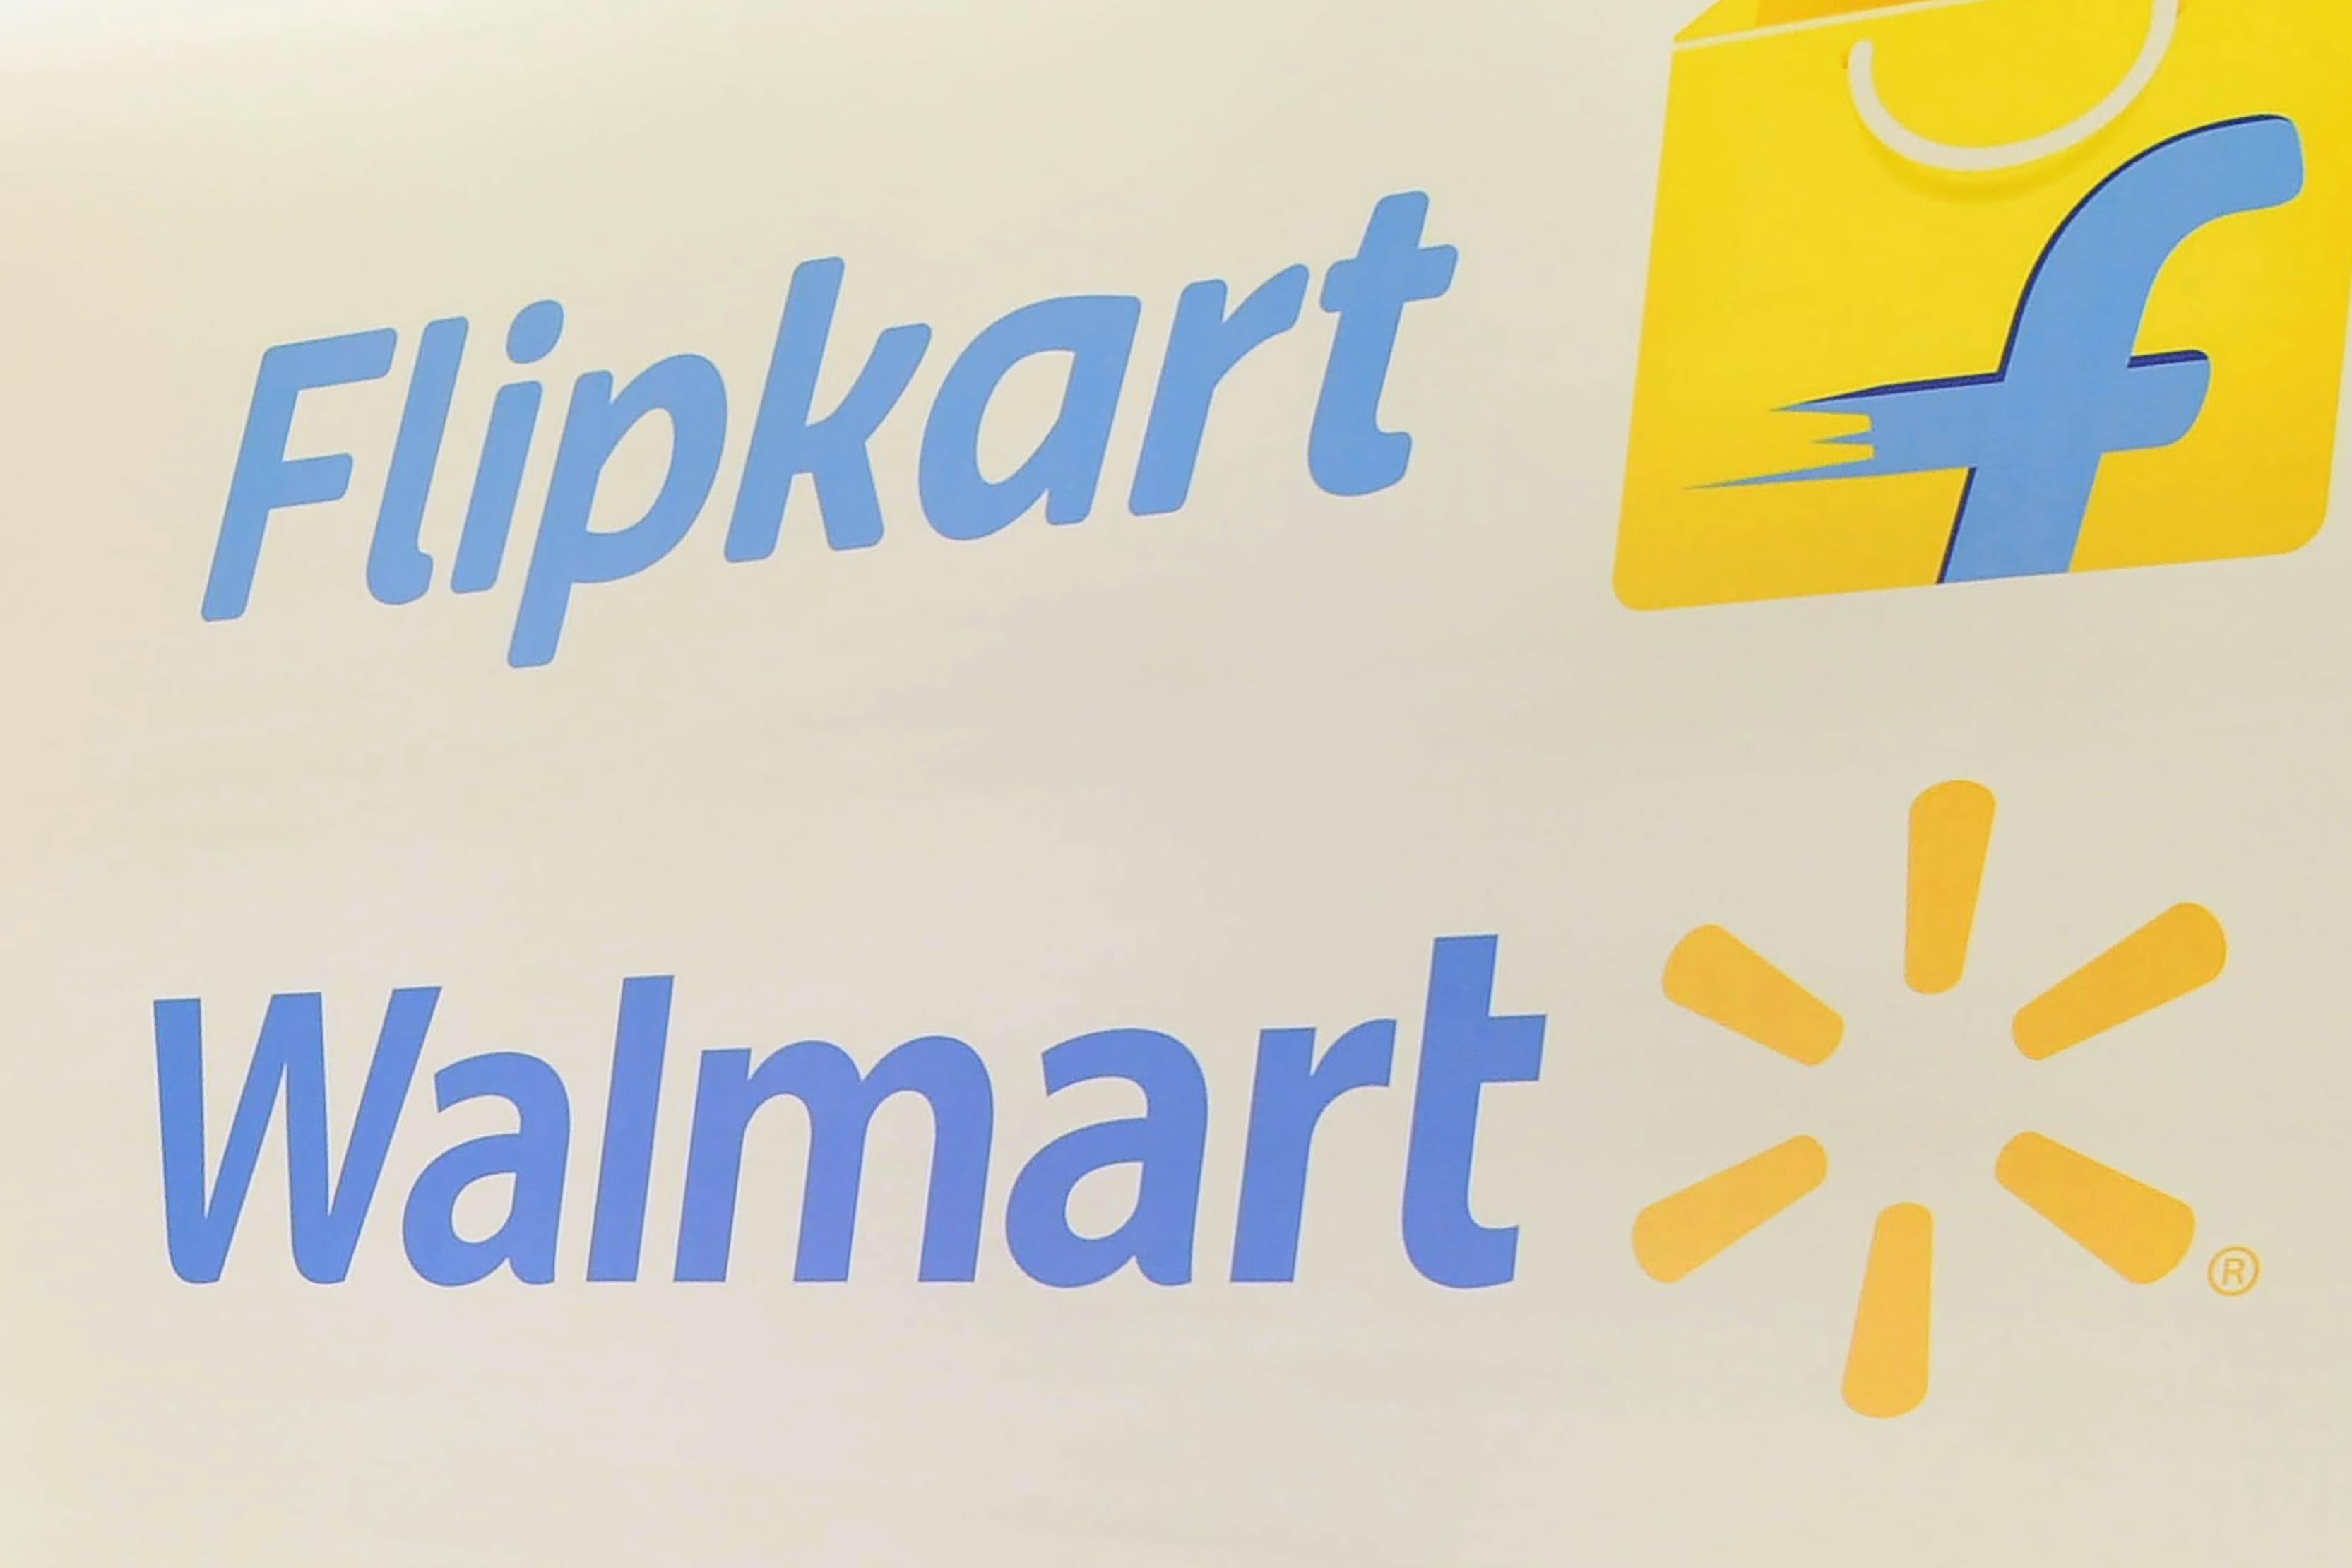 Walmart bought a 77 percent stake in Flipkart for $16 billion. 